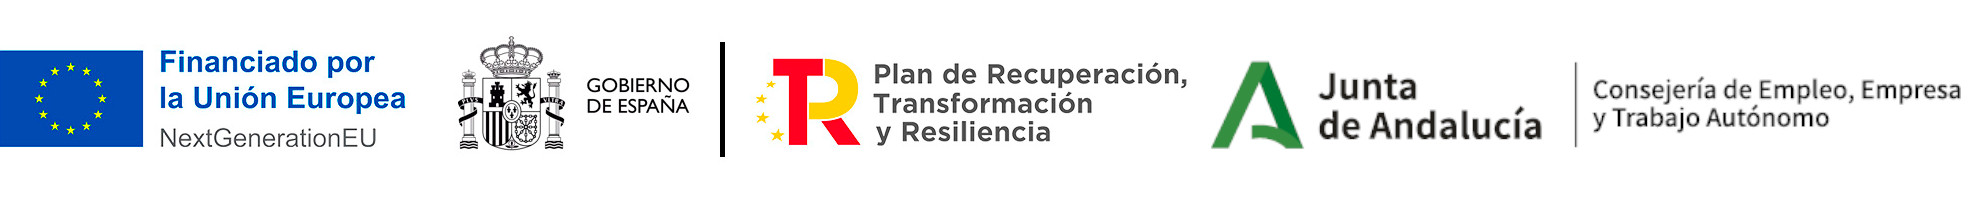 logotipos Next generation, Gobierno España, Plan Recuperación, Junta de Andalucía